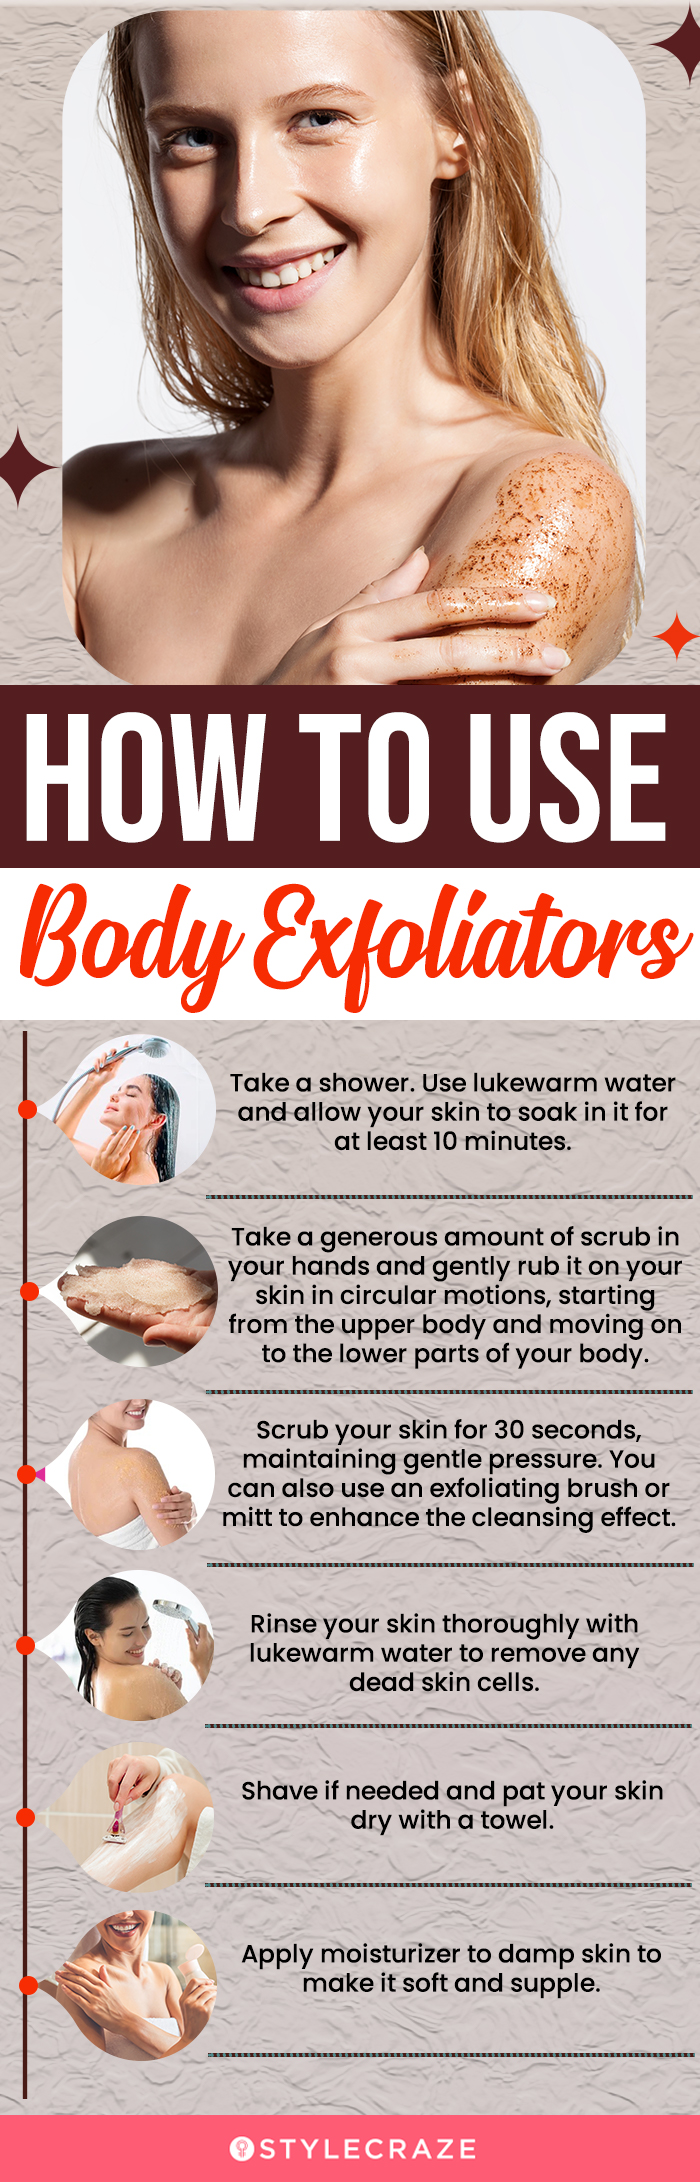 How To Use Body Exfoliators (infographic)